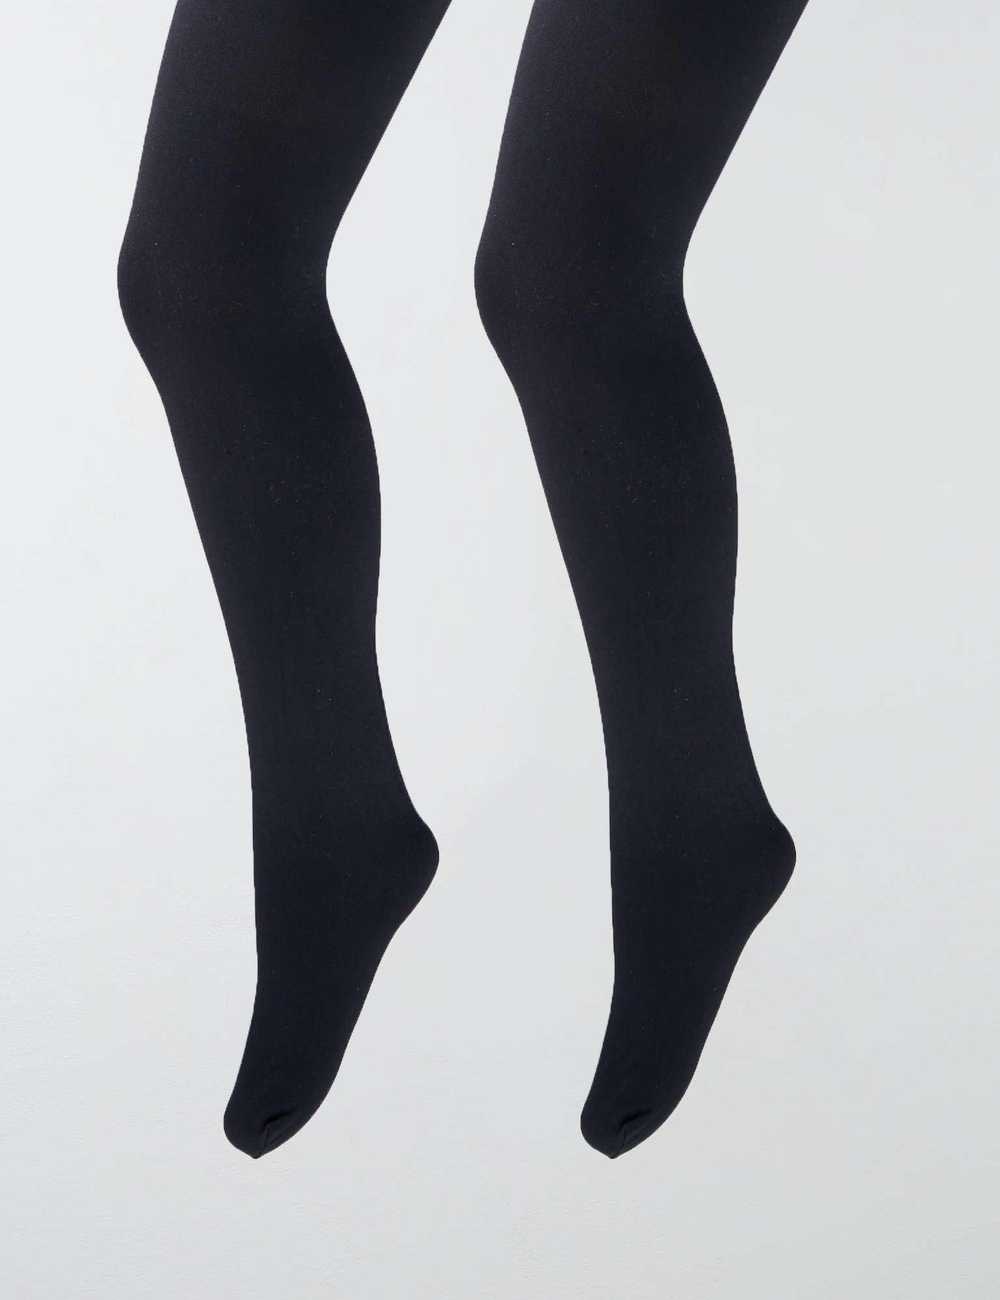 Buy Pack of 2 pairs of fine opaque tights Online in Dubai & the UAE|Kiabi